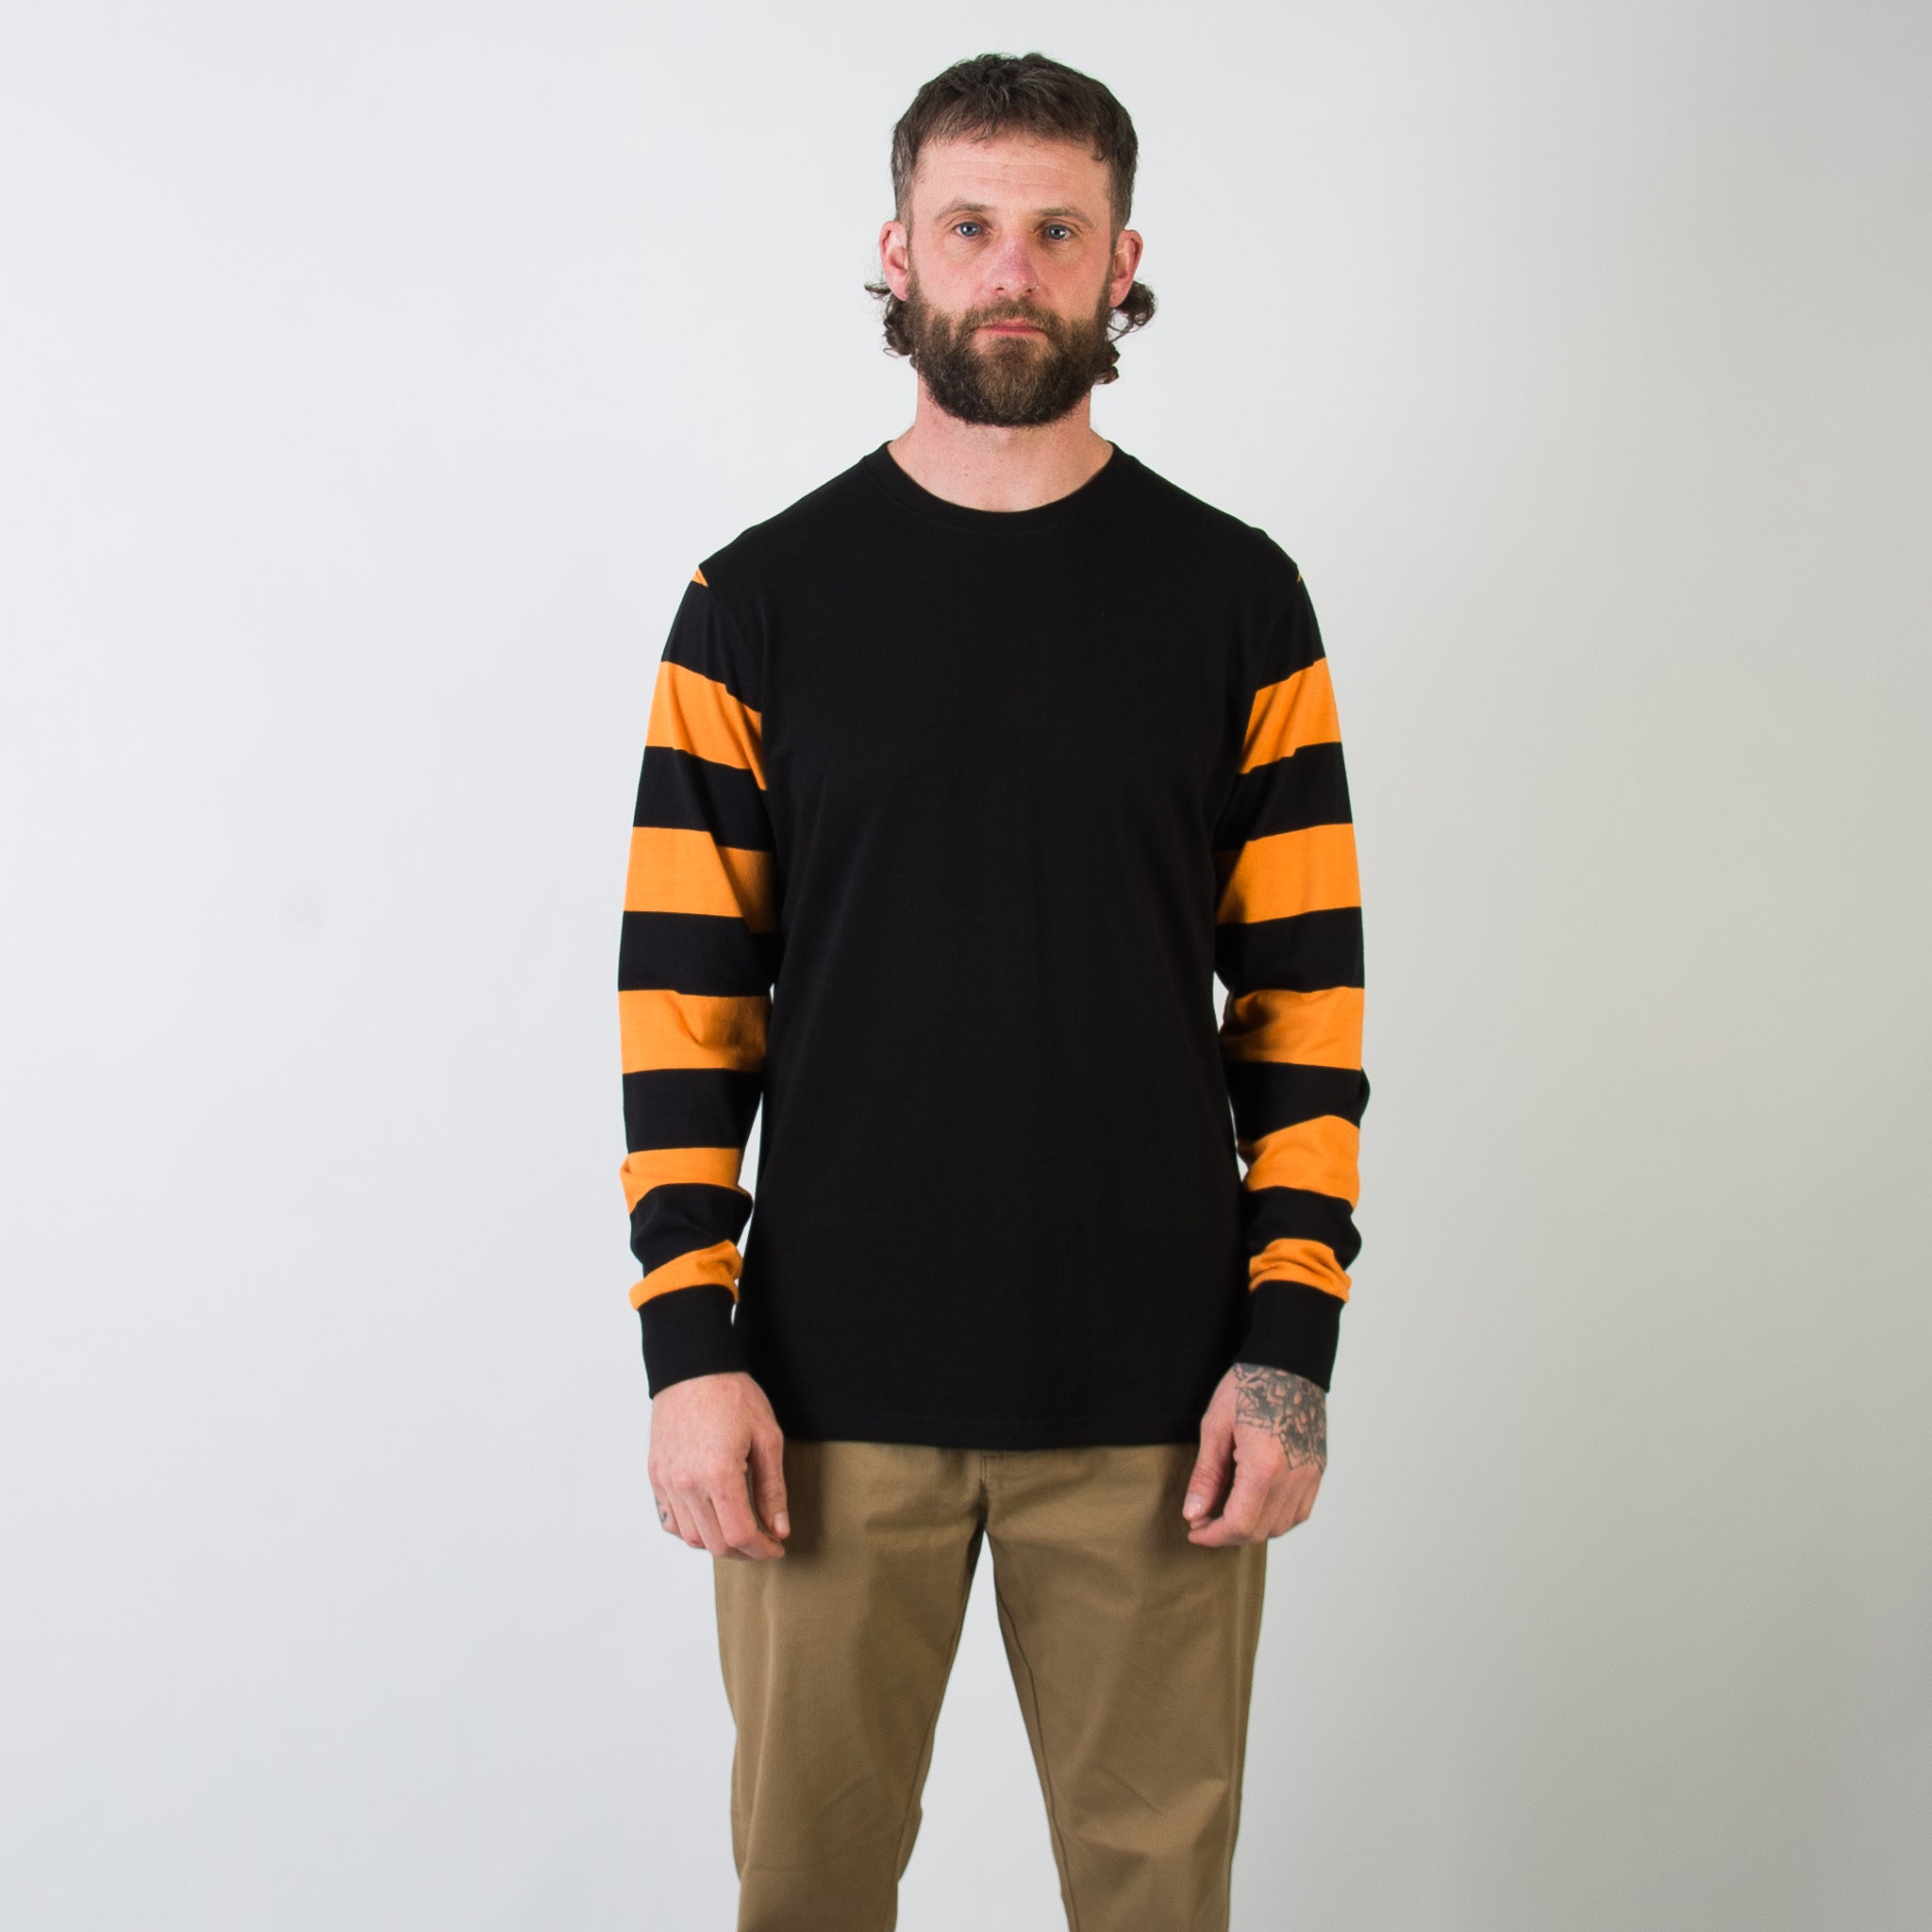 Essential Breakout Long Sleeve T Shirt - Black/Rust